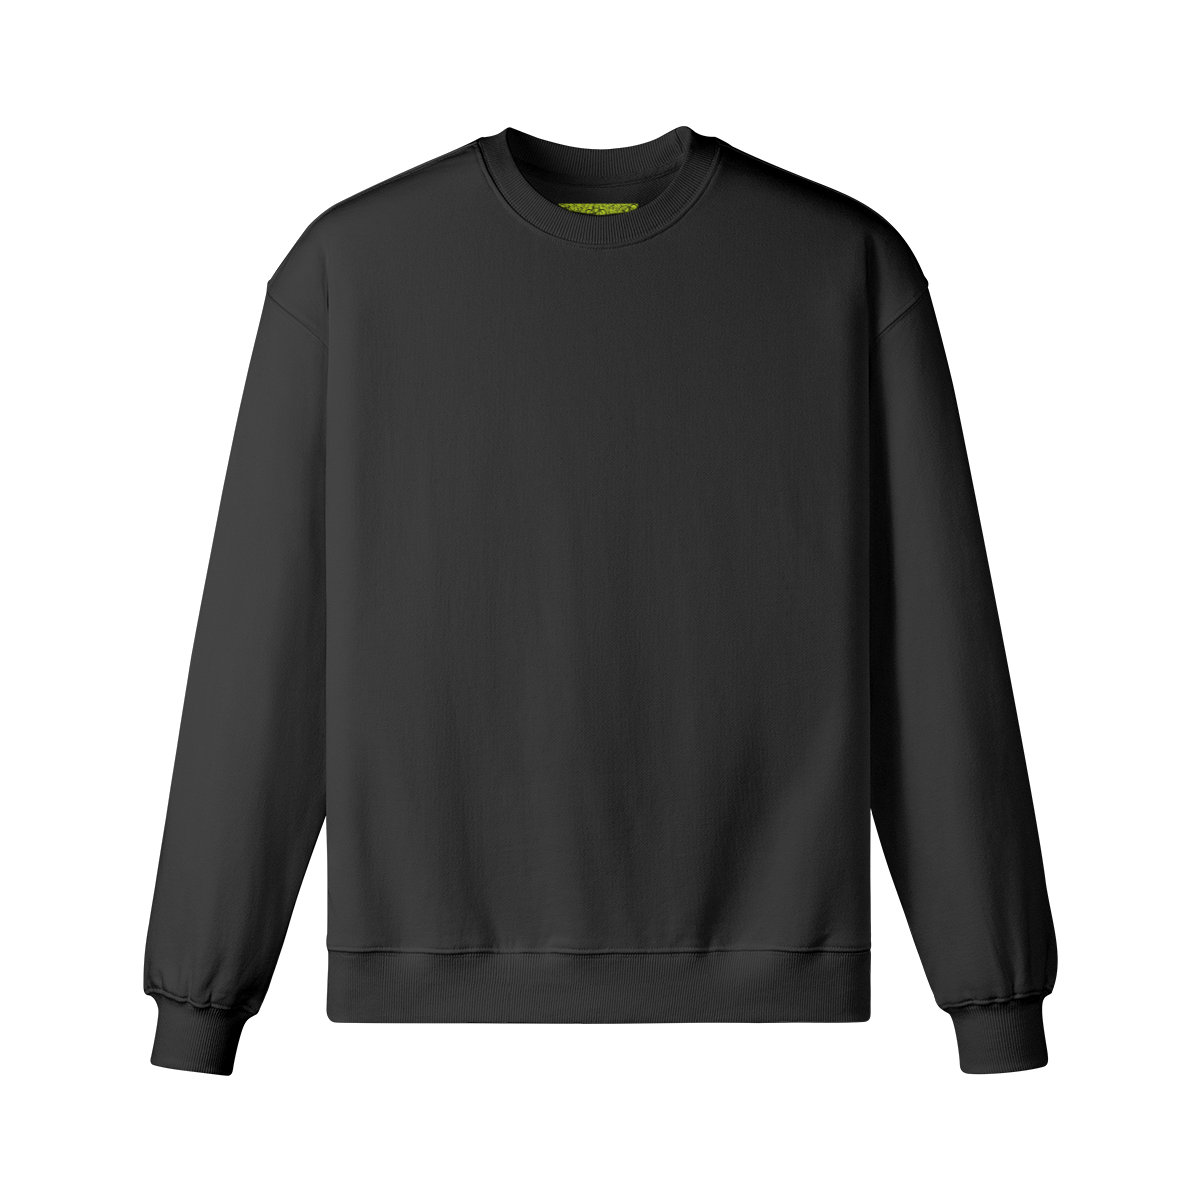 CANDY TRIP (BACK PRINT) - Unisex Oversized Sweatshirt